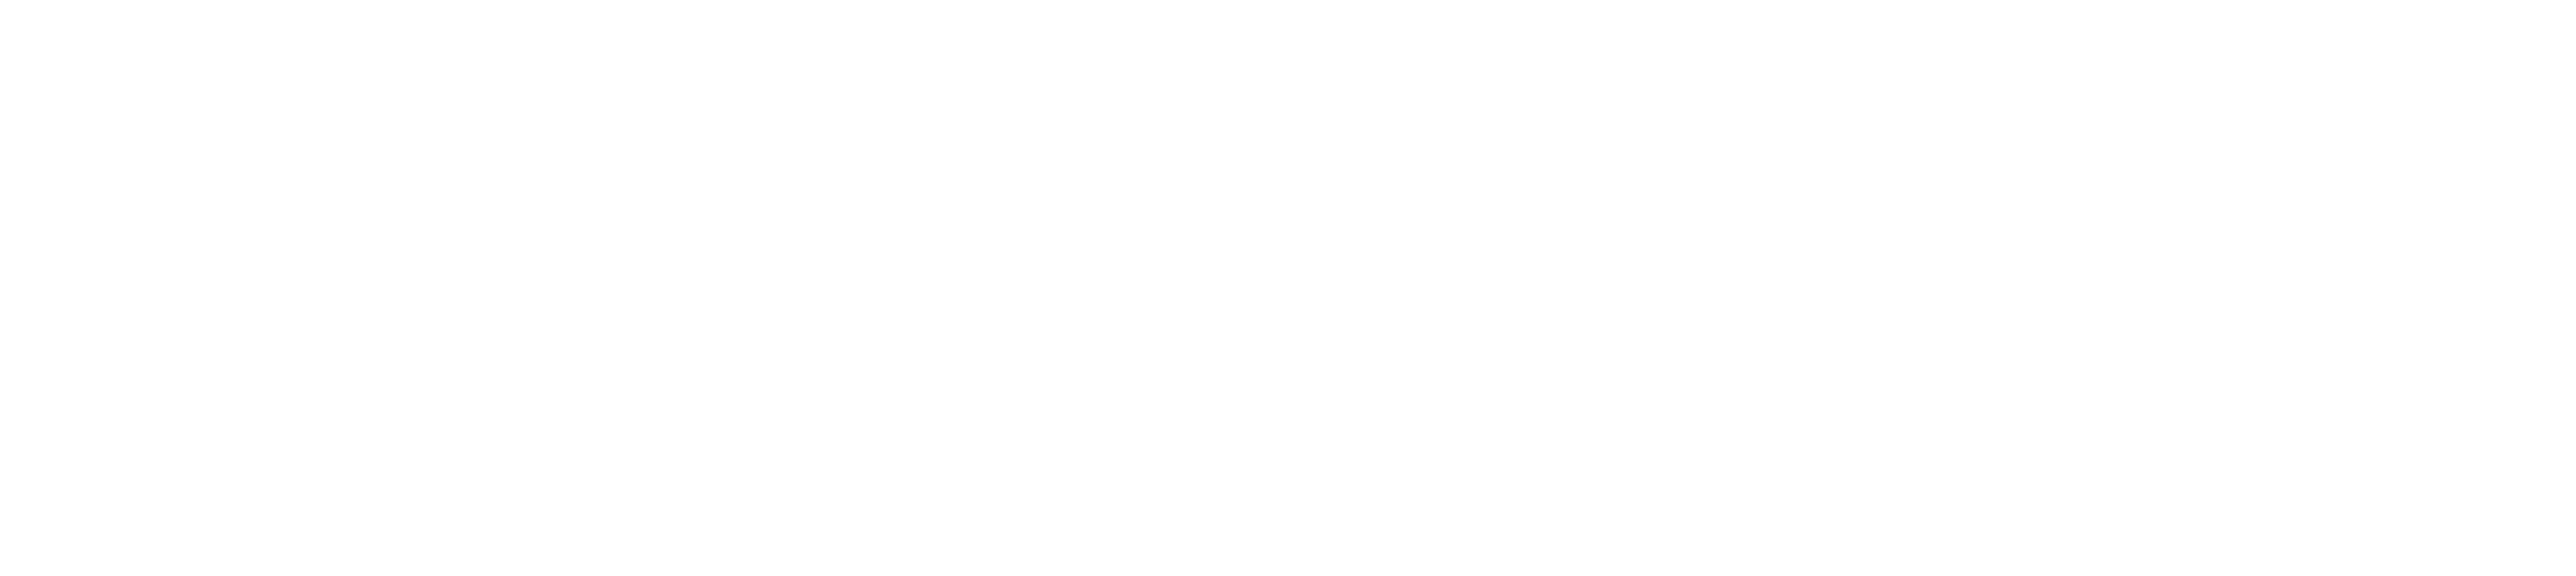 aviatema equipment logo white color